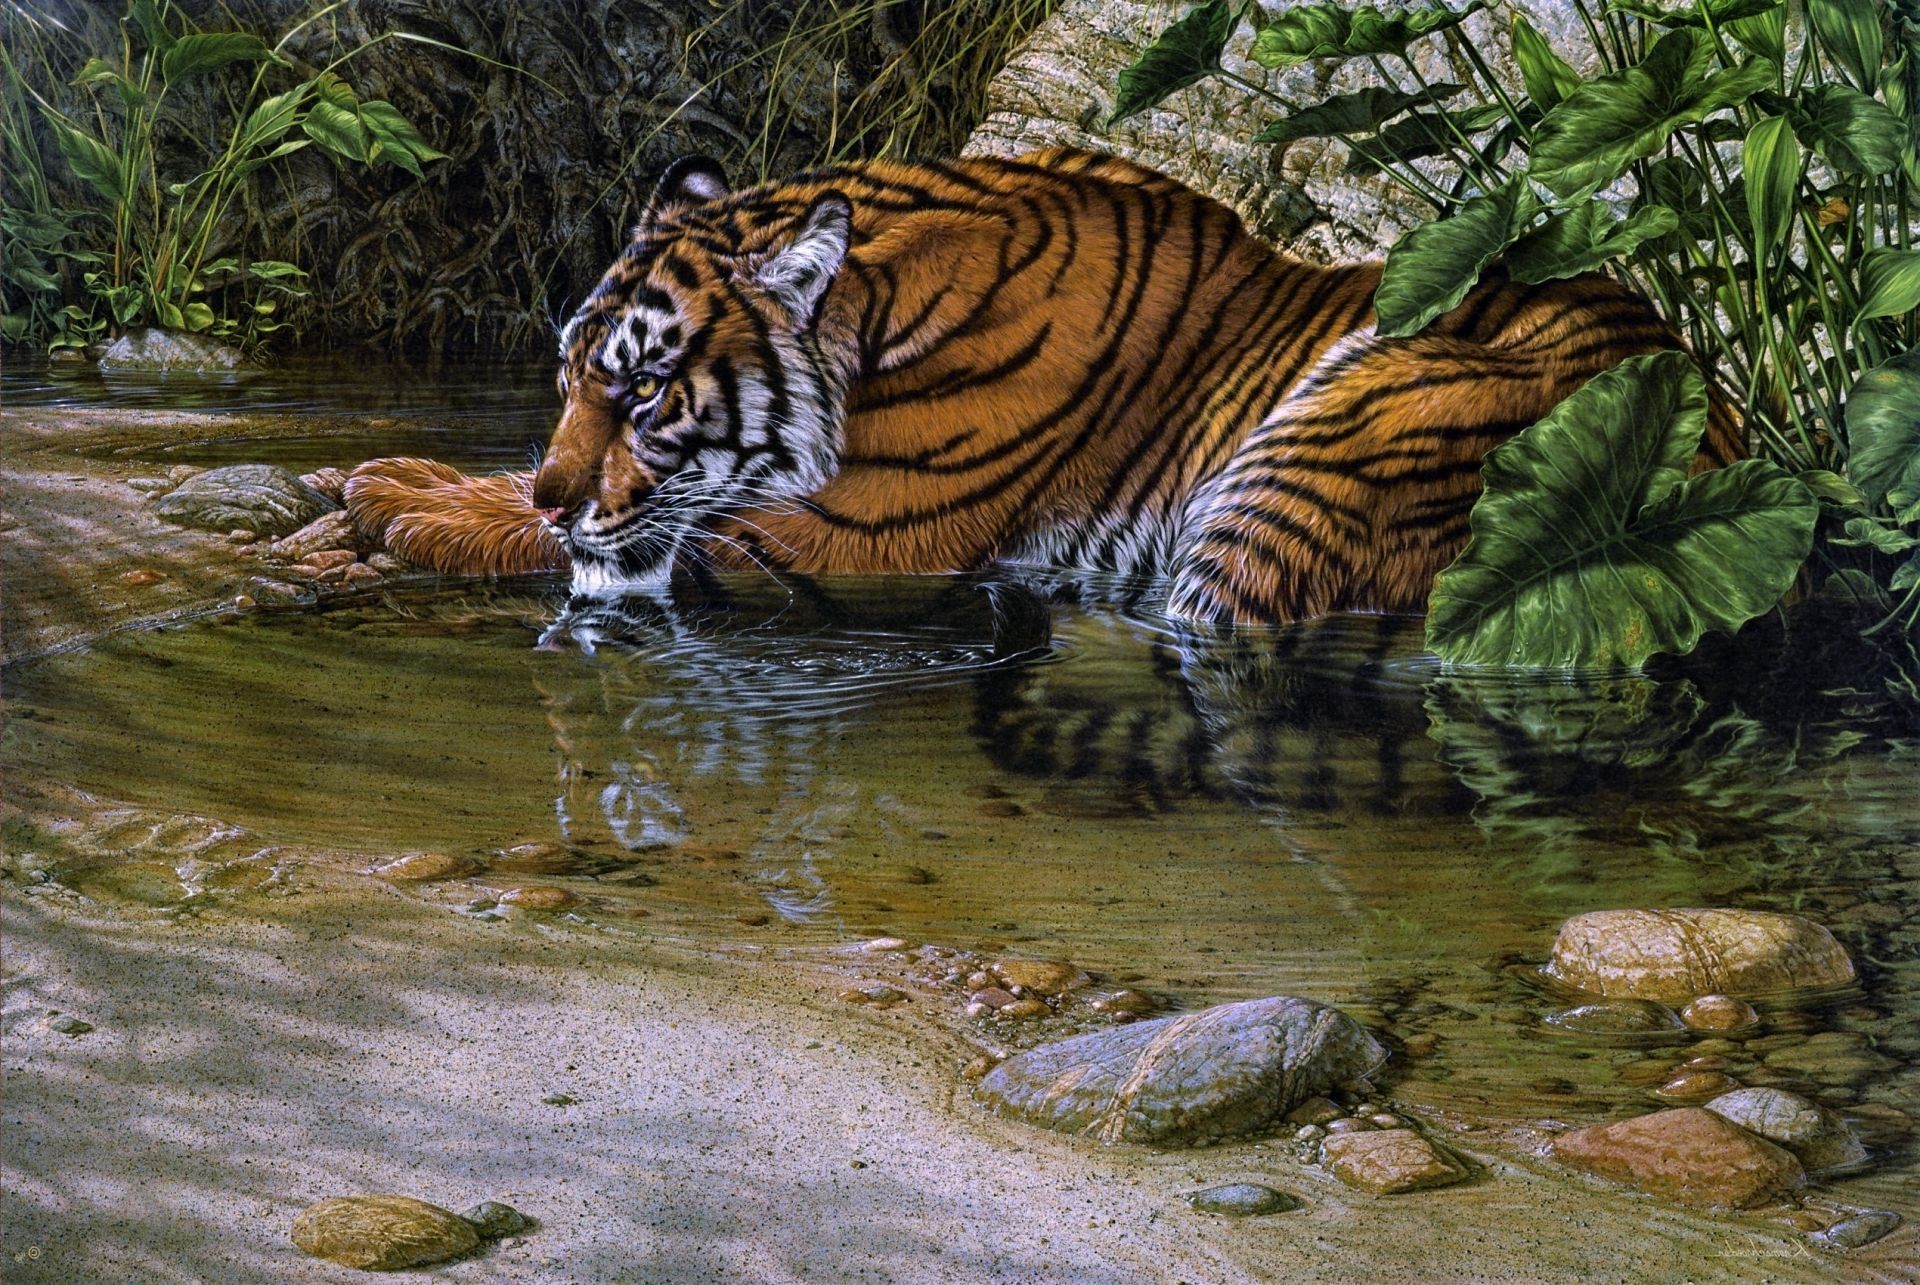 tigers tiger wildlife jungle nature cat wild zoo predator mammal water danger hunter outdoors aggression